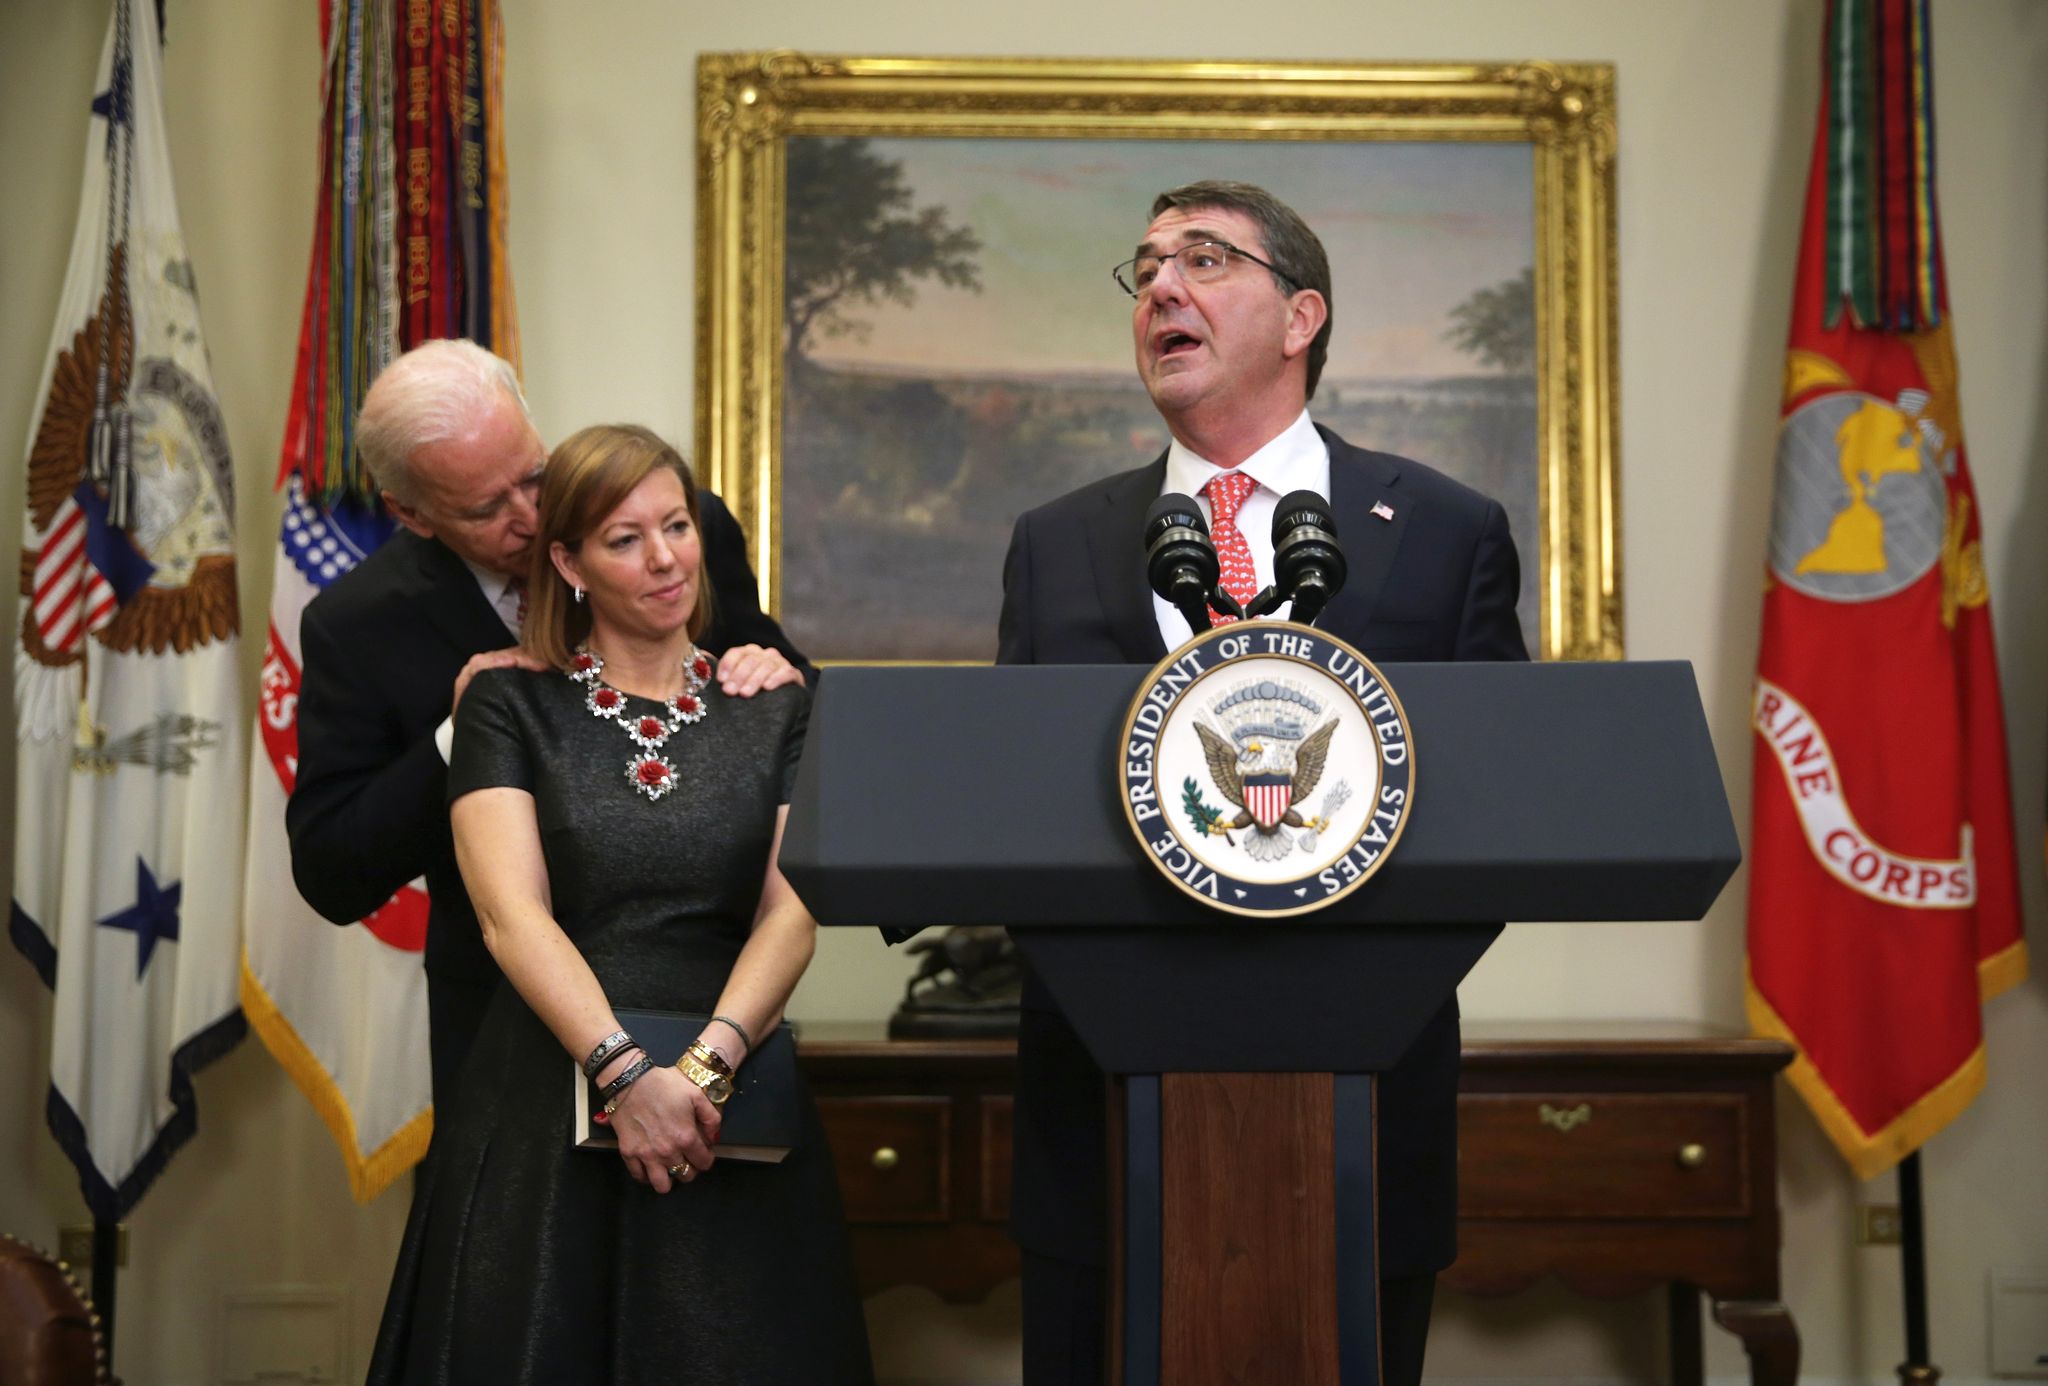 Joe Biden Swears In New Defense Secretary Ashton Carter